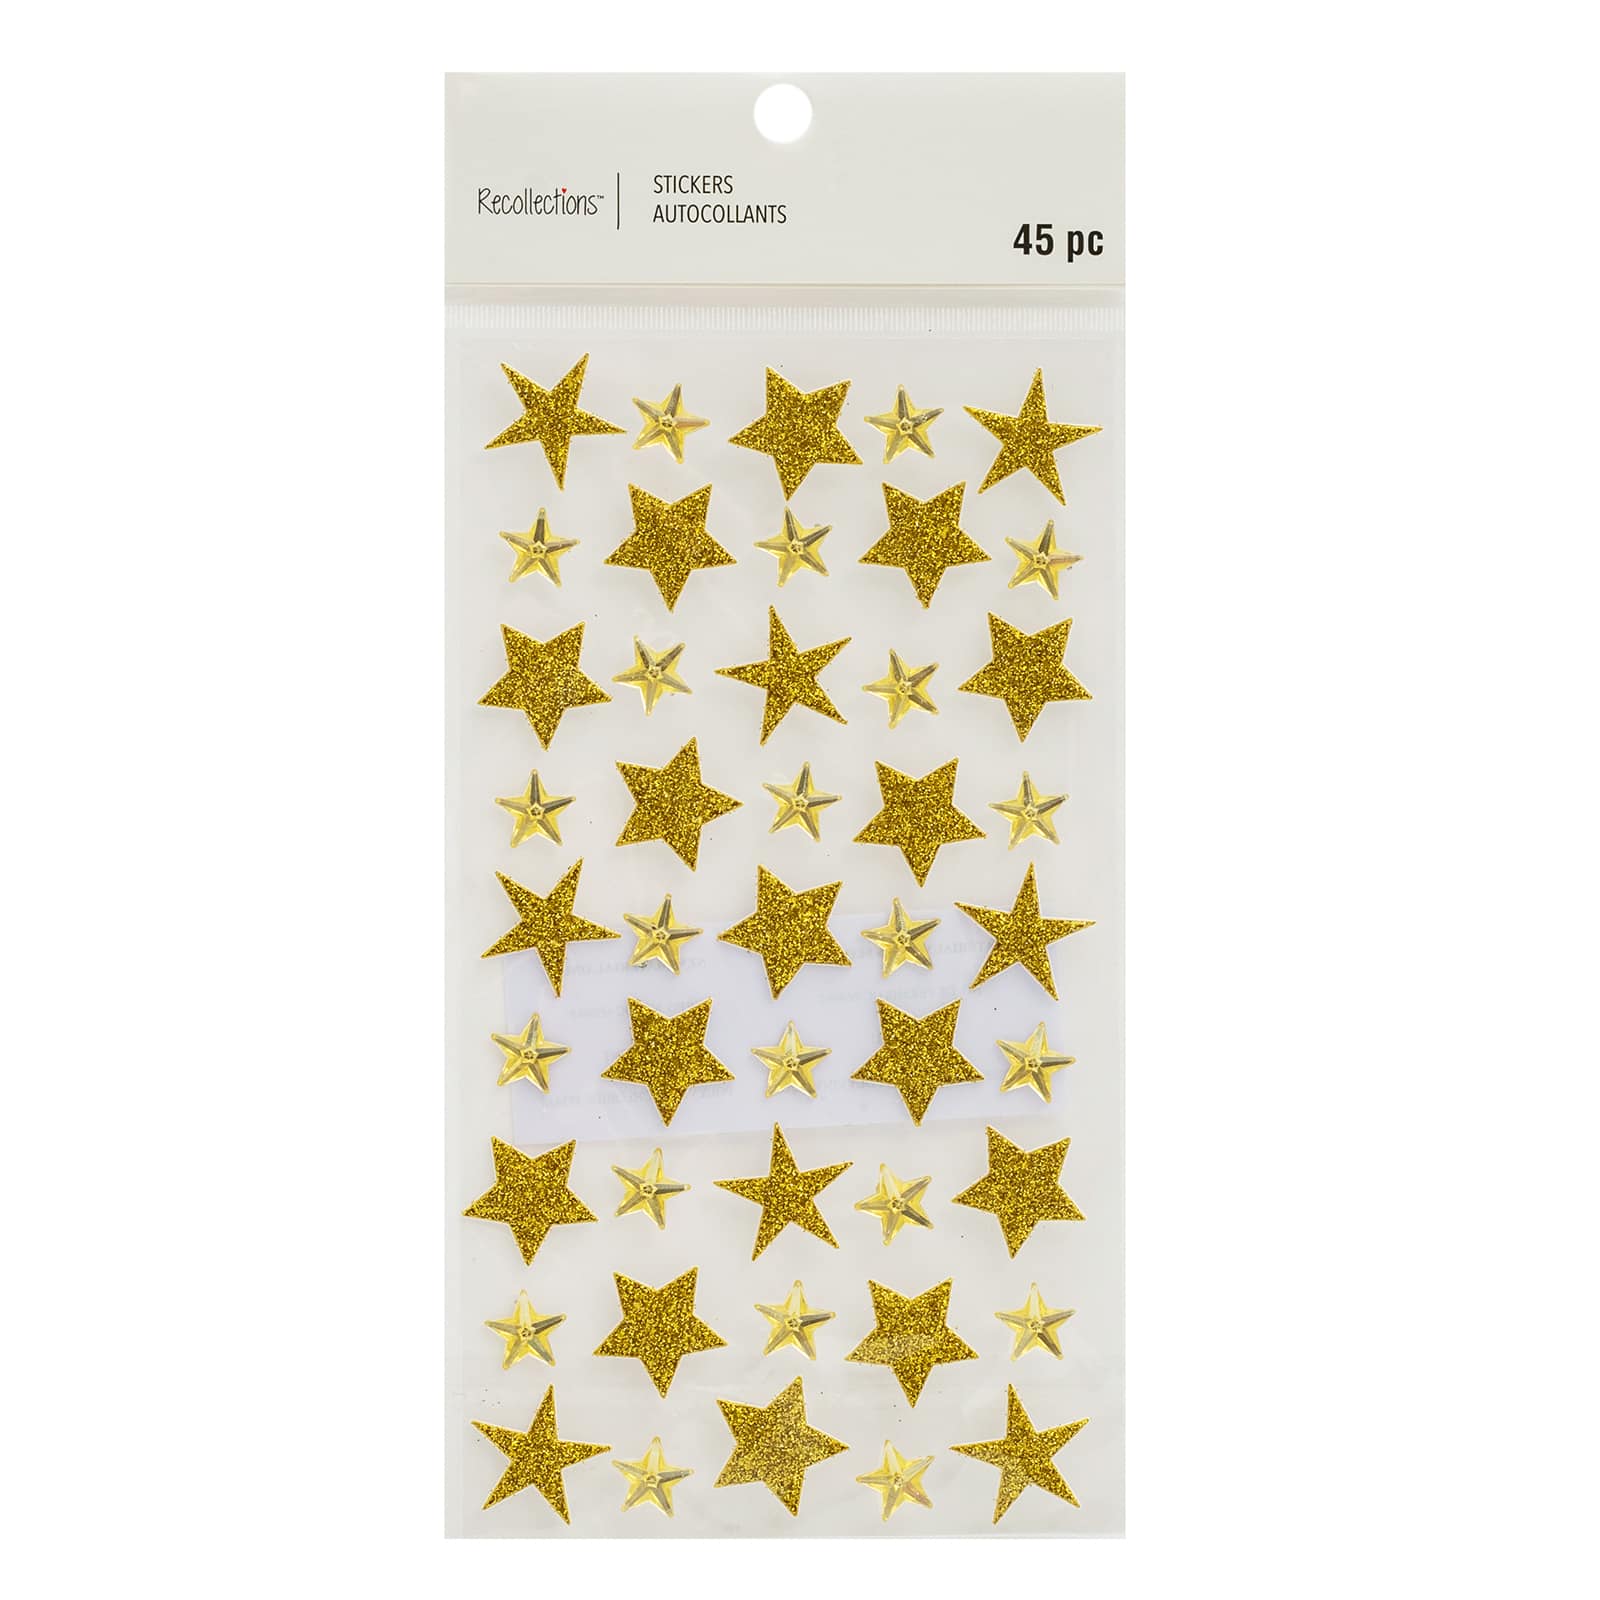 3-D Gold Star Glitter Foam Dimensional Stickers